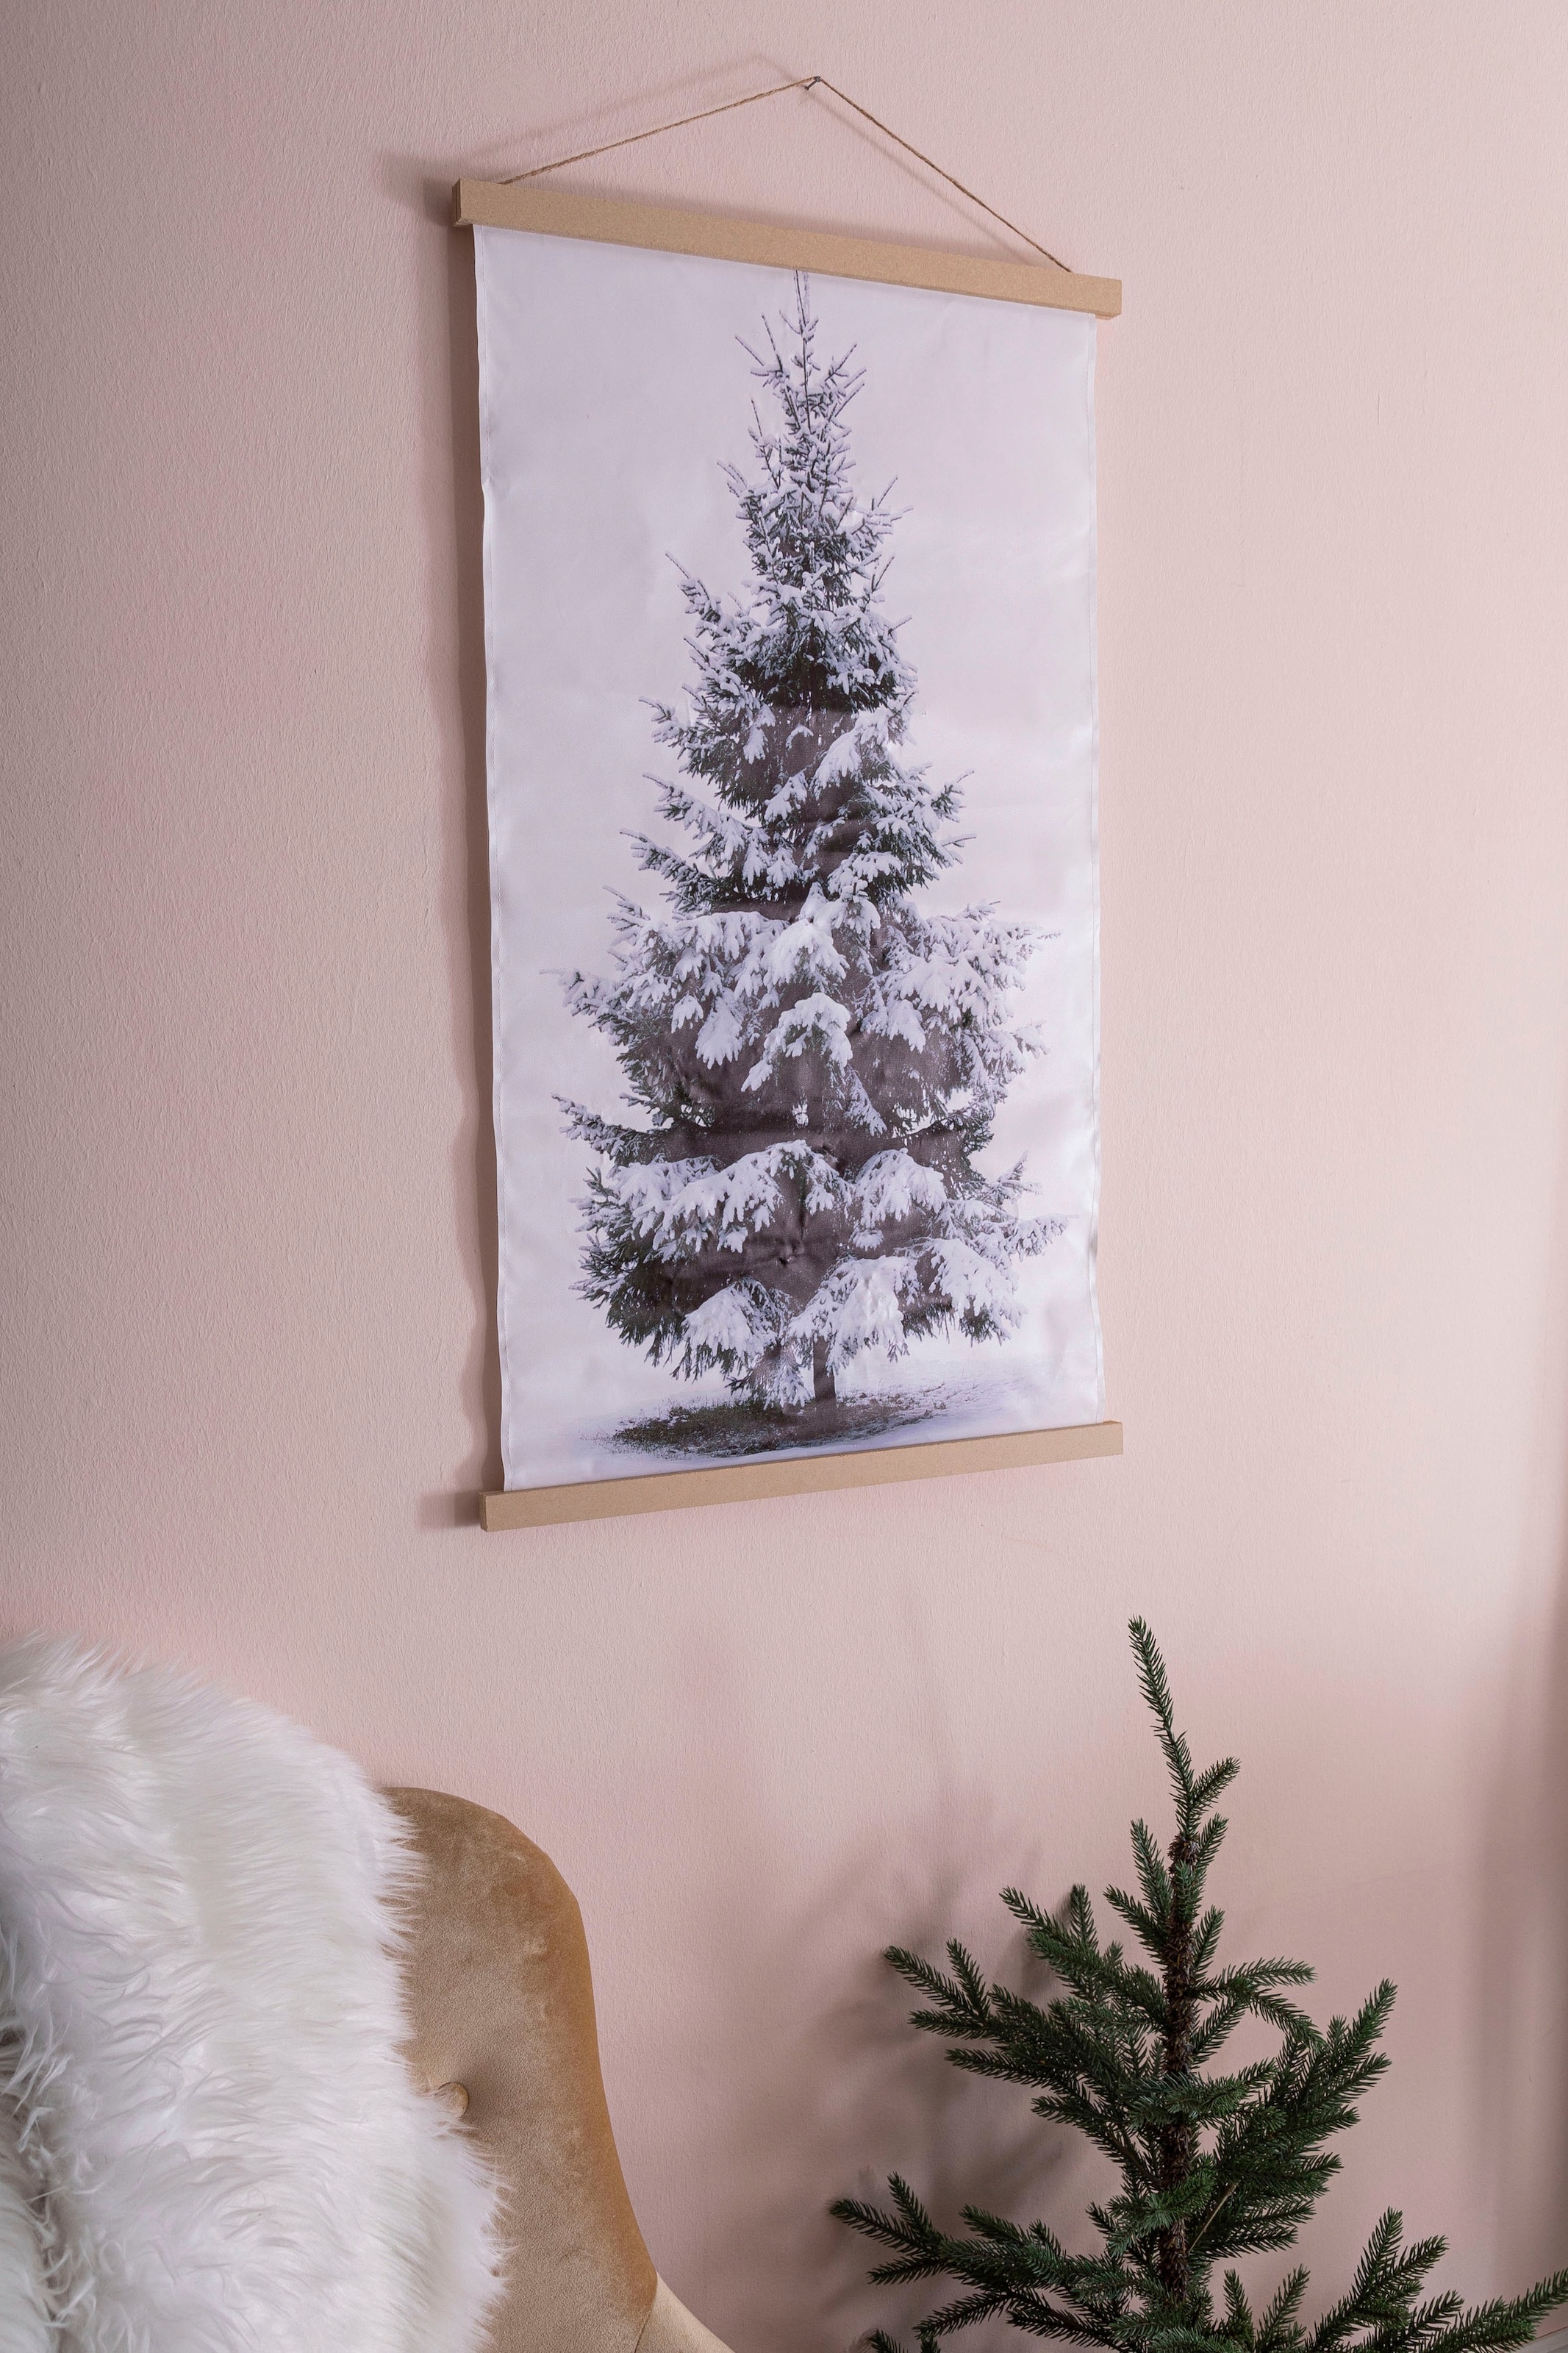 Myflair Möbel & Accessoires LED-Bild »Wandbehang Tannenbaum, mit LED-Beleuchtung, Weihnachtsdeko«, (1 St.), LED-Leinwand zum Aufhängen, Höhe ca. 92 cm, Batteriebetrieb